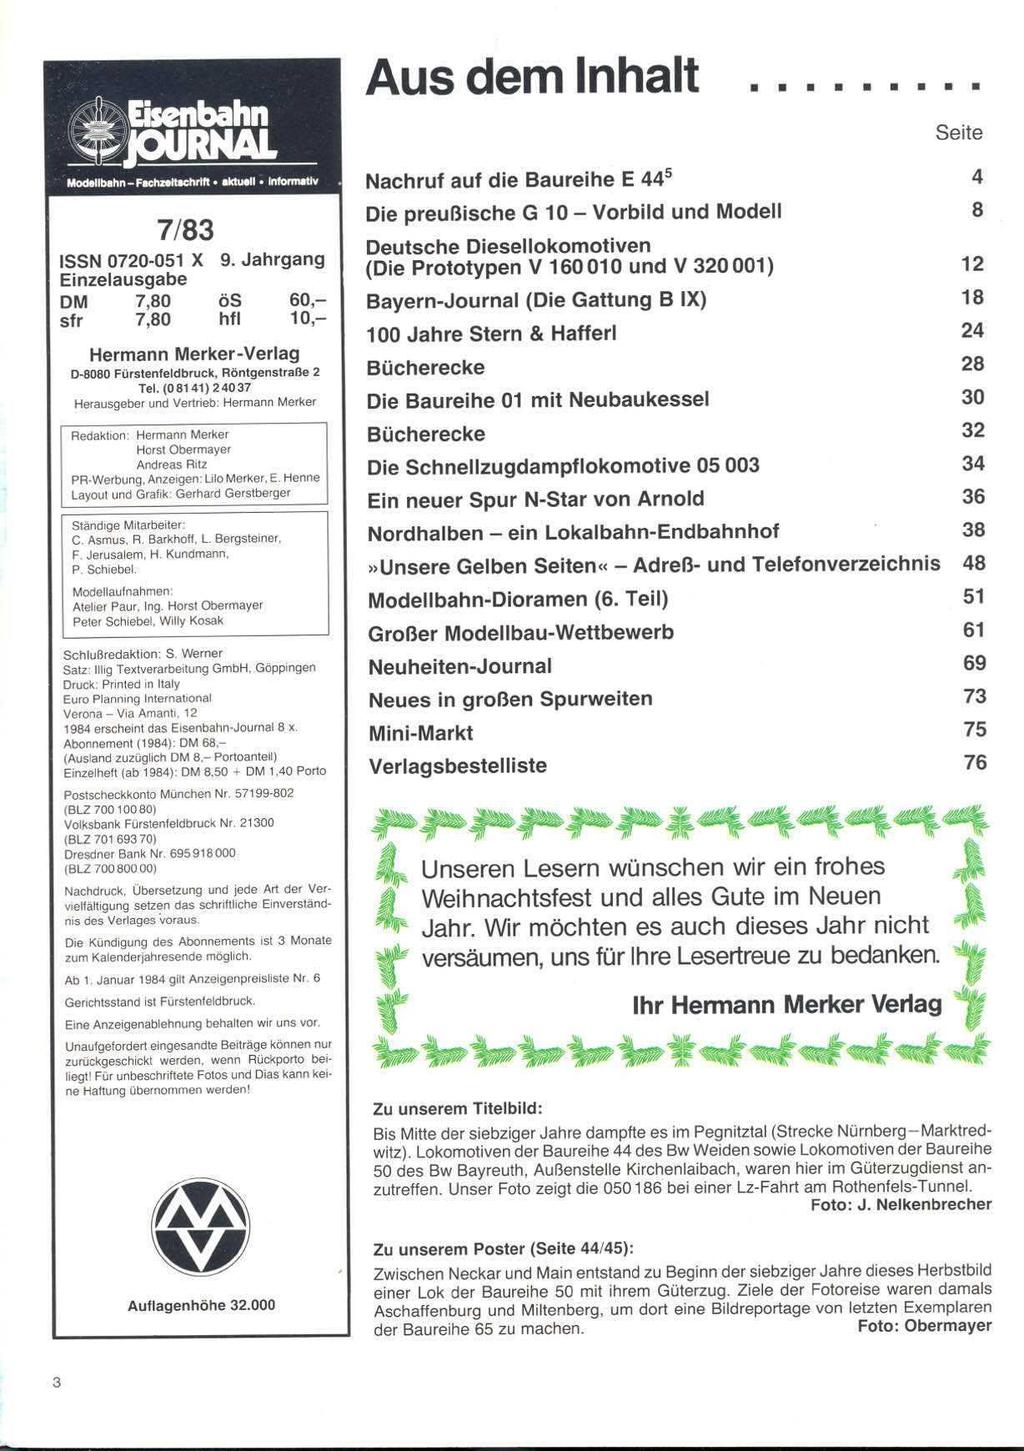 Ausdemlnhalt n n n n n n n n n Seite 7183 ;SN 0720-051 X 9. Jahrgang,inzelausgabe IM 7,80 ÖS 60,- fr 7,80 hfl lo,- Hermann Merker-Verlag D-EO80 Fürstenfeldbruck, Röntgenstraße 2 Tel.